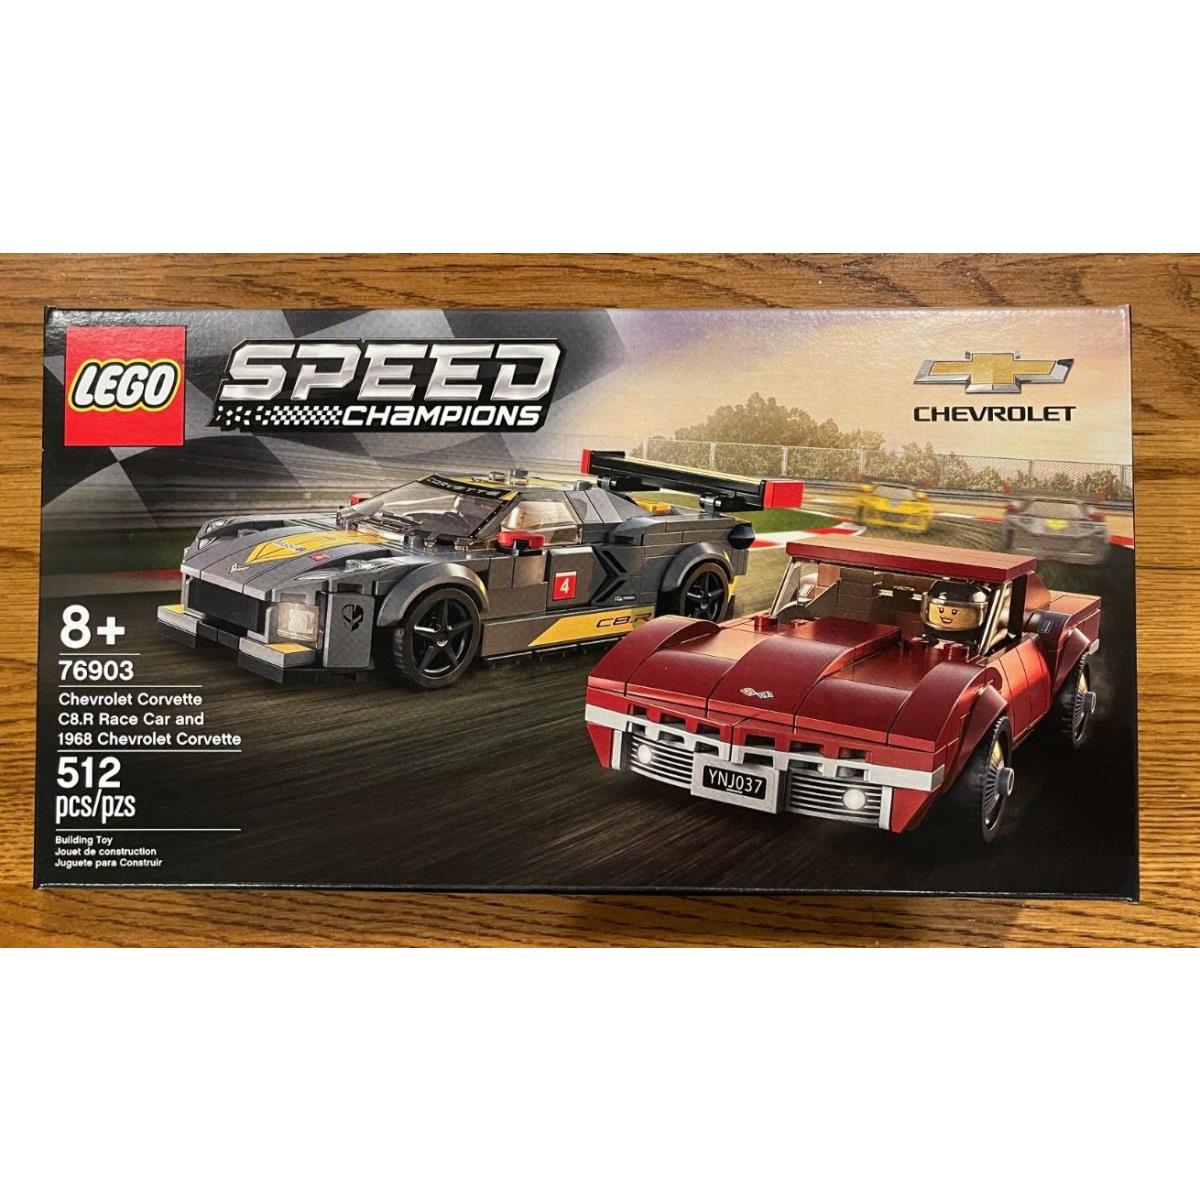 Lego Speed Champions Chevrolet Corvette C8 1968 Corvette Set 76903